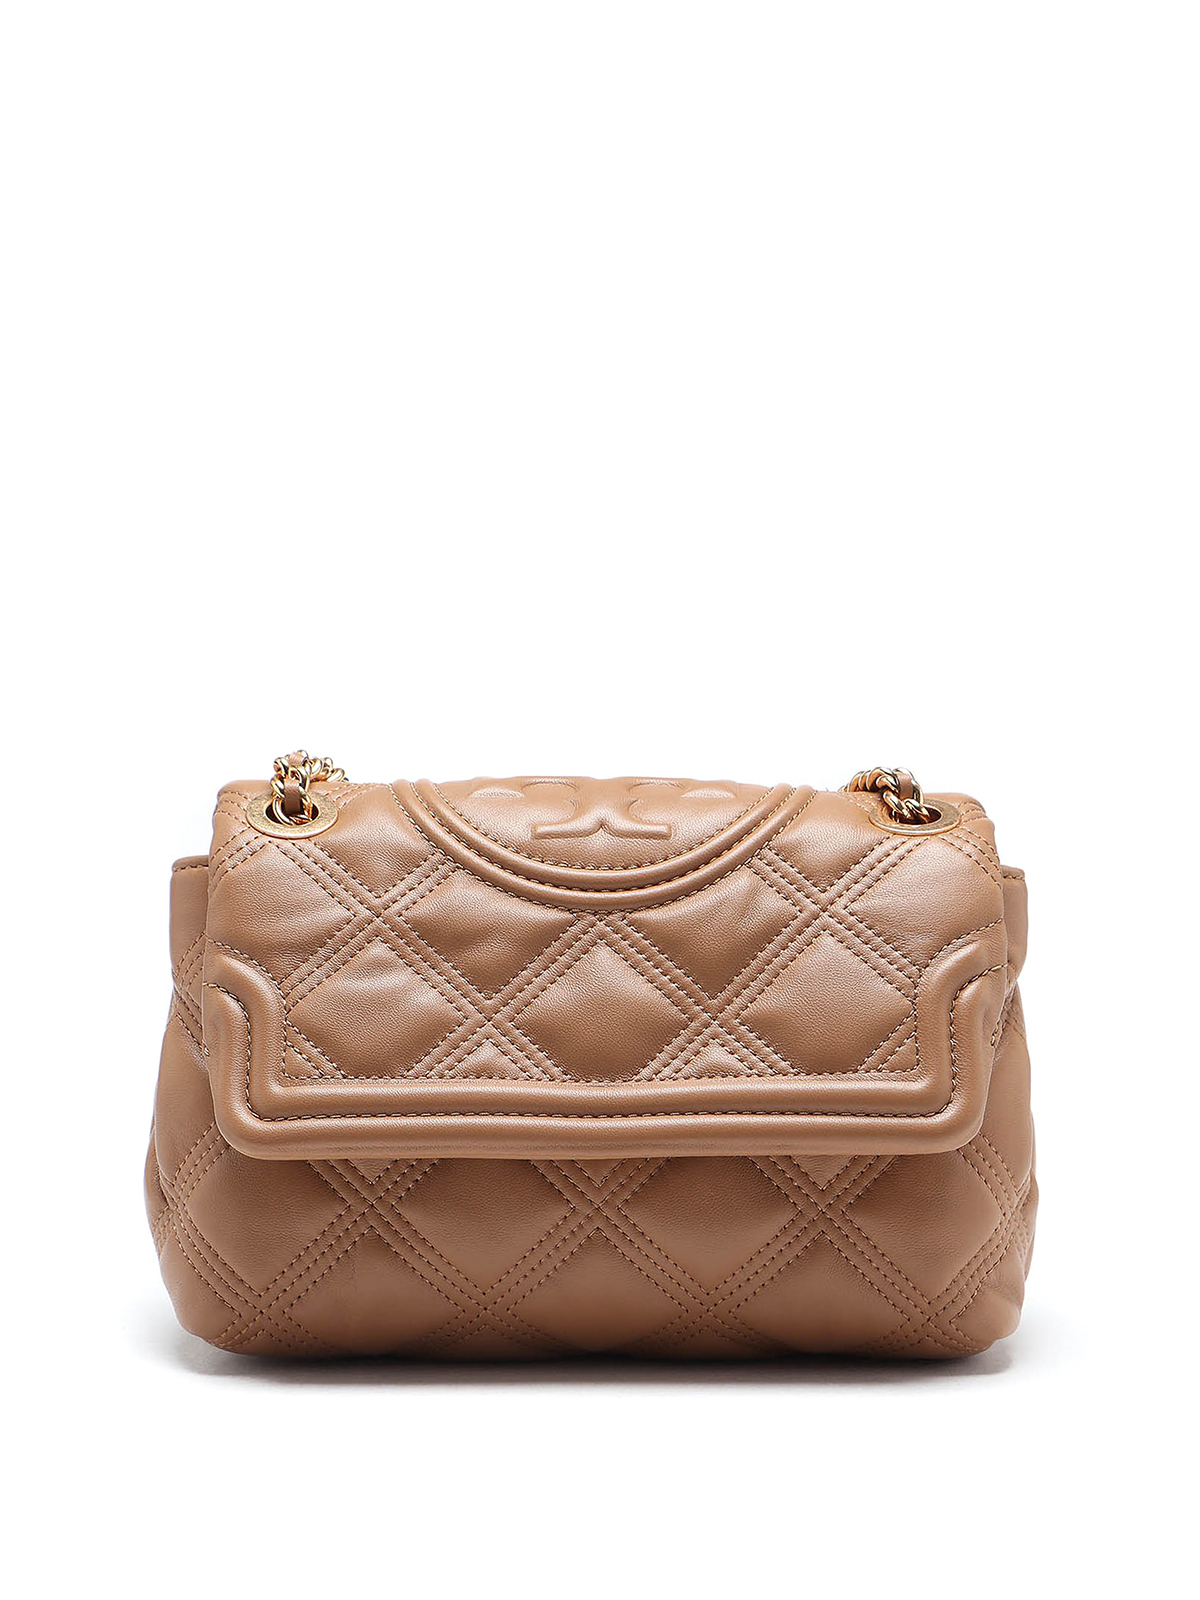 Buy Shoulder Purse for Women PU Leather Small Hobo Handbag Top Handle Bag  Crossbody Brown + Katloo Nail Clipper at Amazon.in